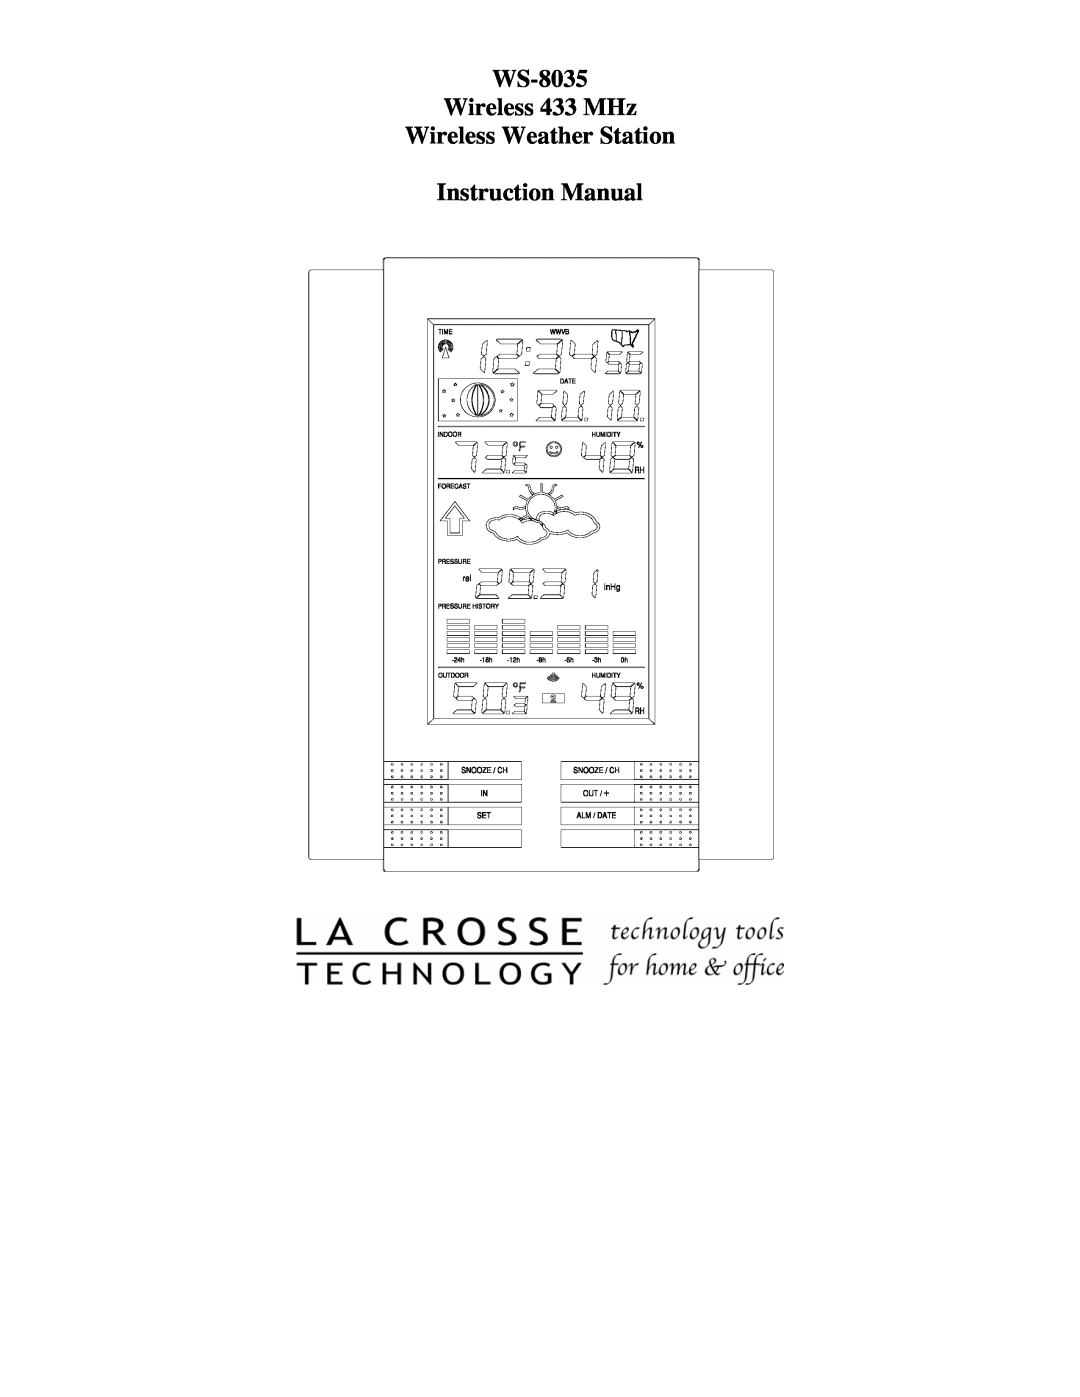 La Crosse Technology instruction manual WS-8035 Wireless 433 MHz Wireless Weather Station Instruction Manual 